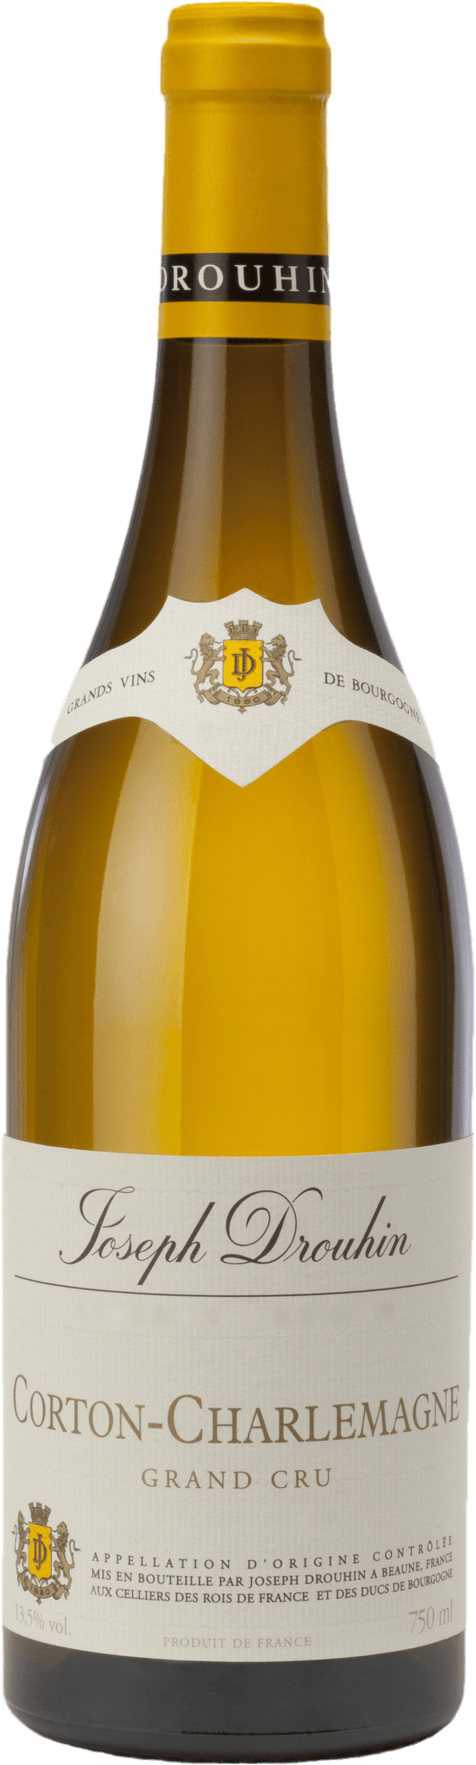 Corton charlemagne grand cru 2017 Domaine Joseph DROUHIN, Bourgogne blanc